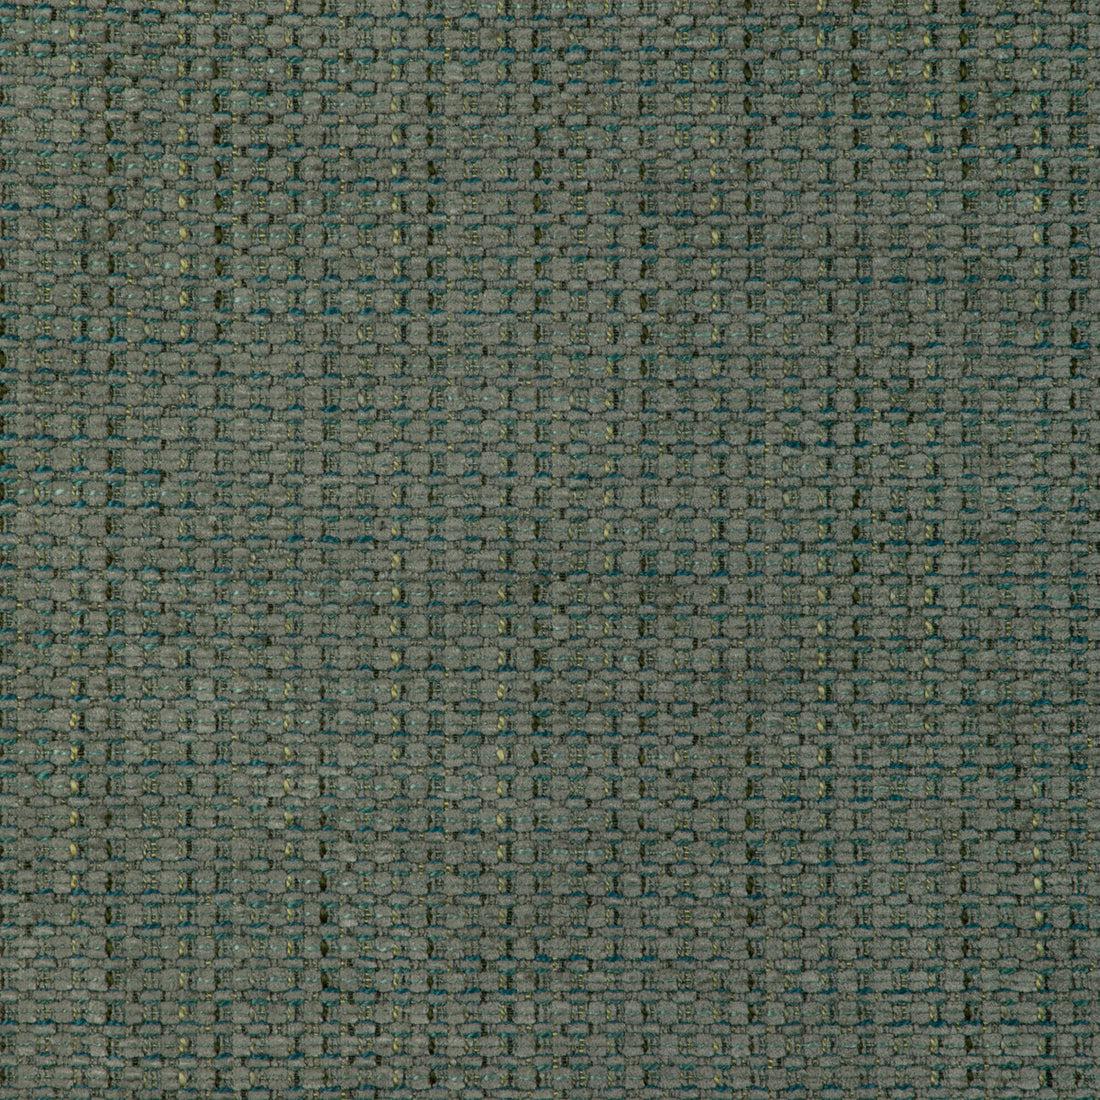 Kravet Smart fabric in 36996-335 color - pattern 36996.335.0 - by Kravet Smart